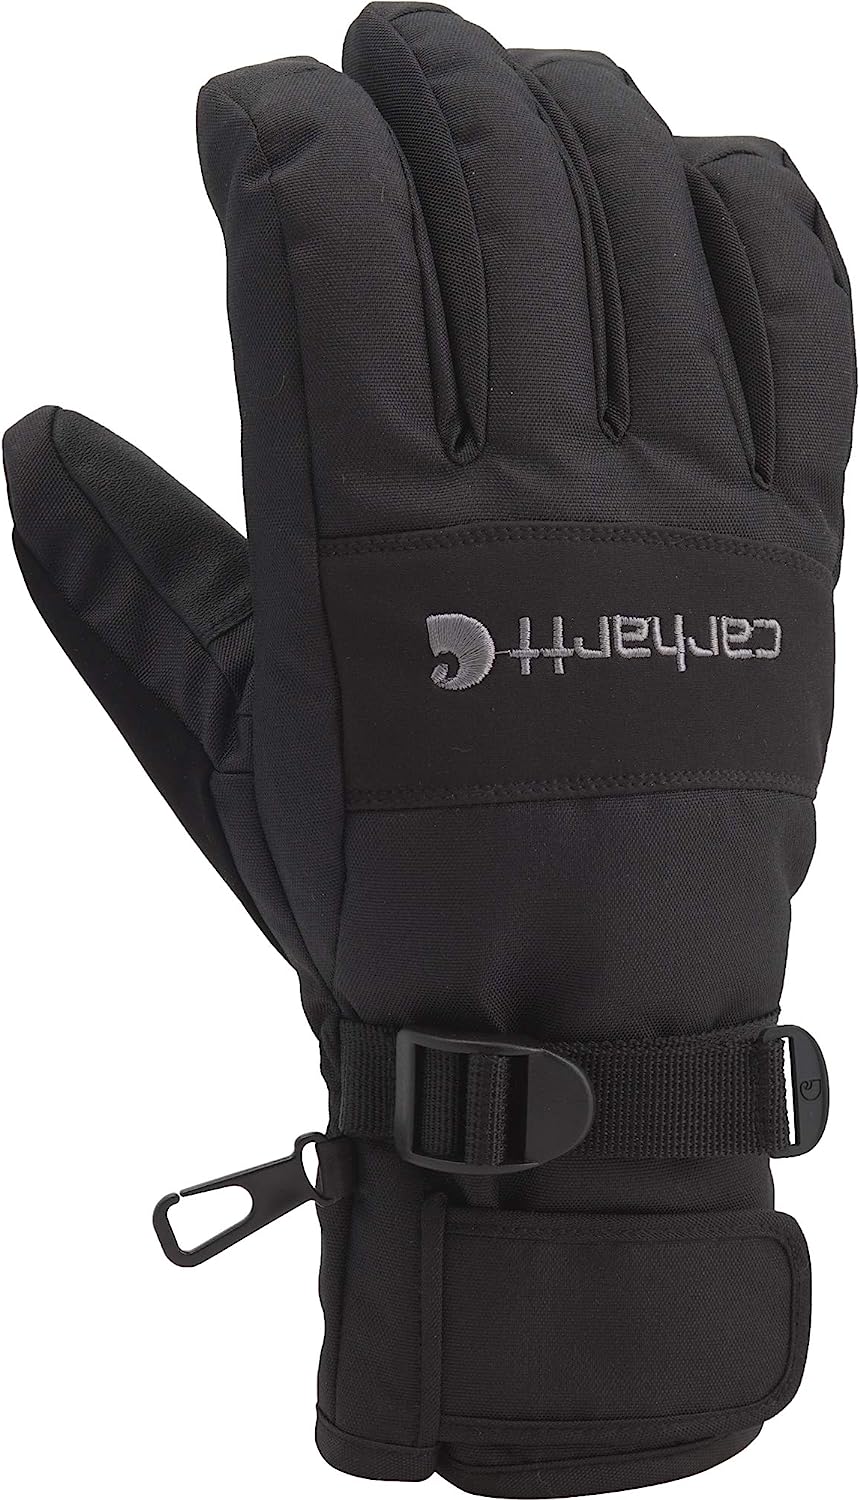 Carhartt Men's W.B. Waterproof Breathable Insulated Glove